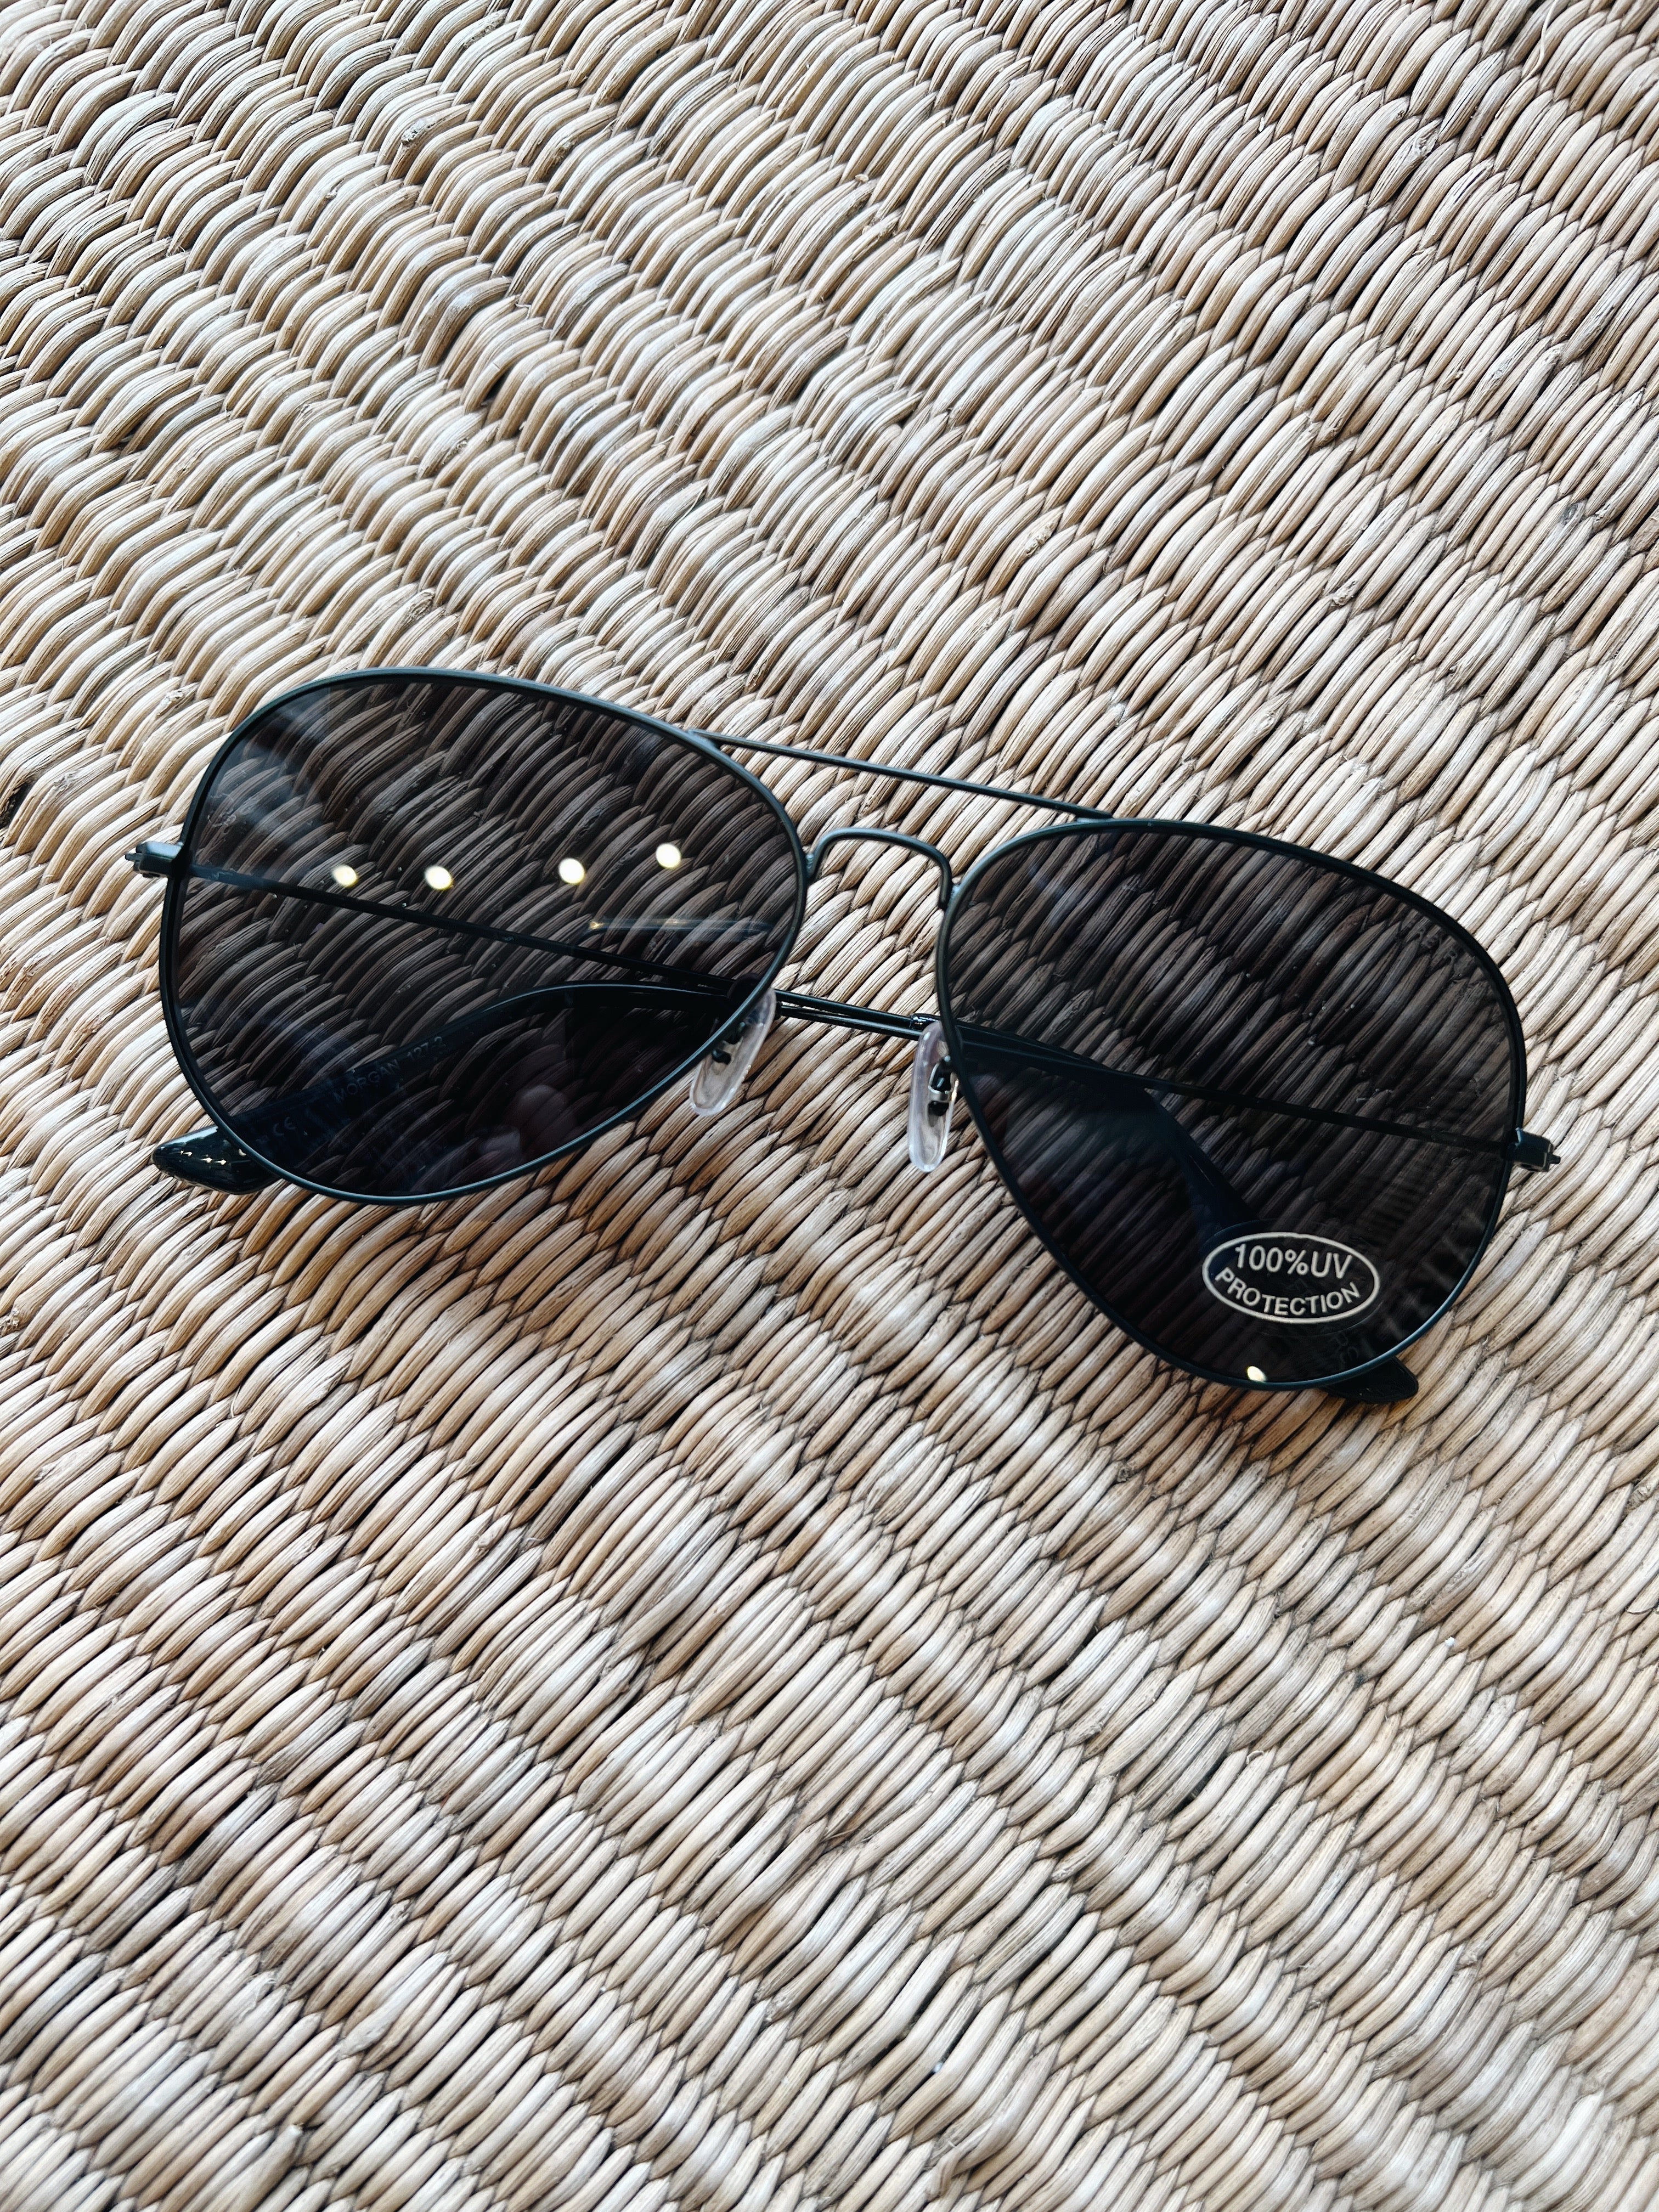 morgan aviator freyrs sunglasses